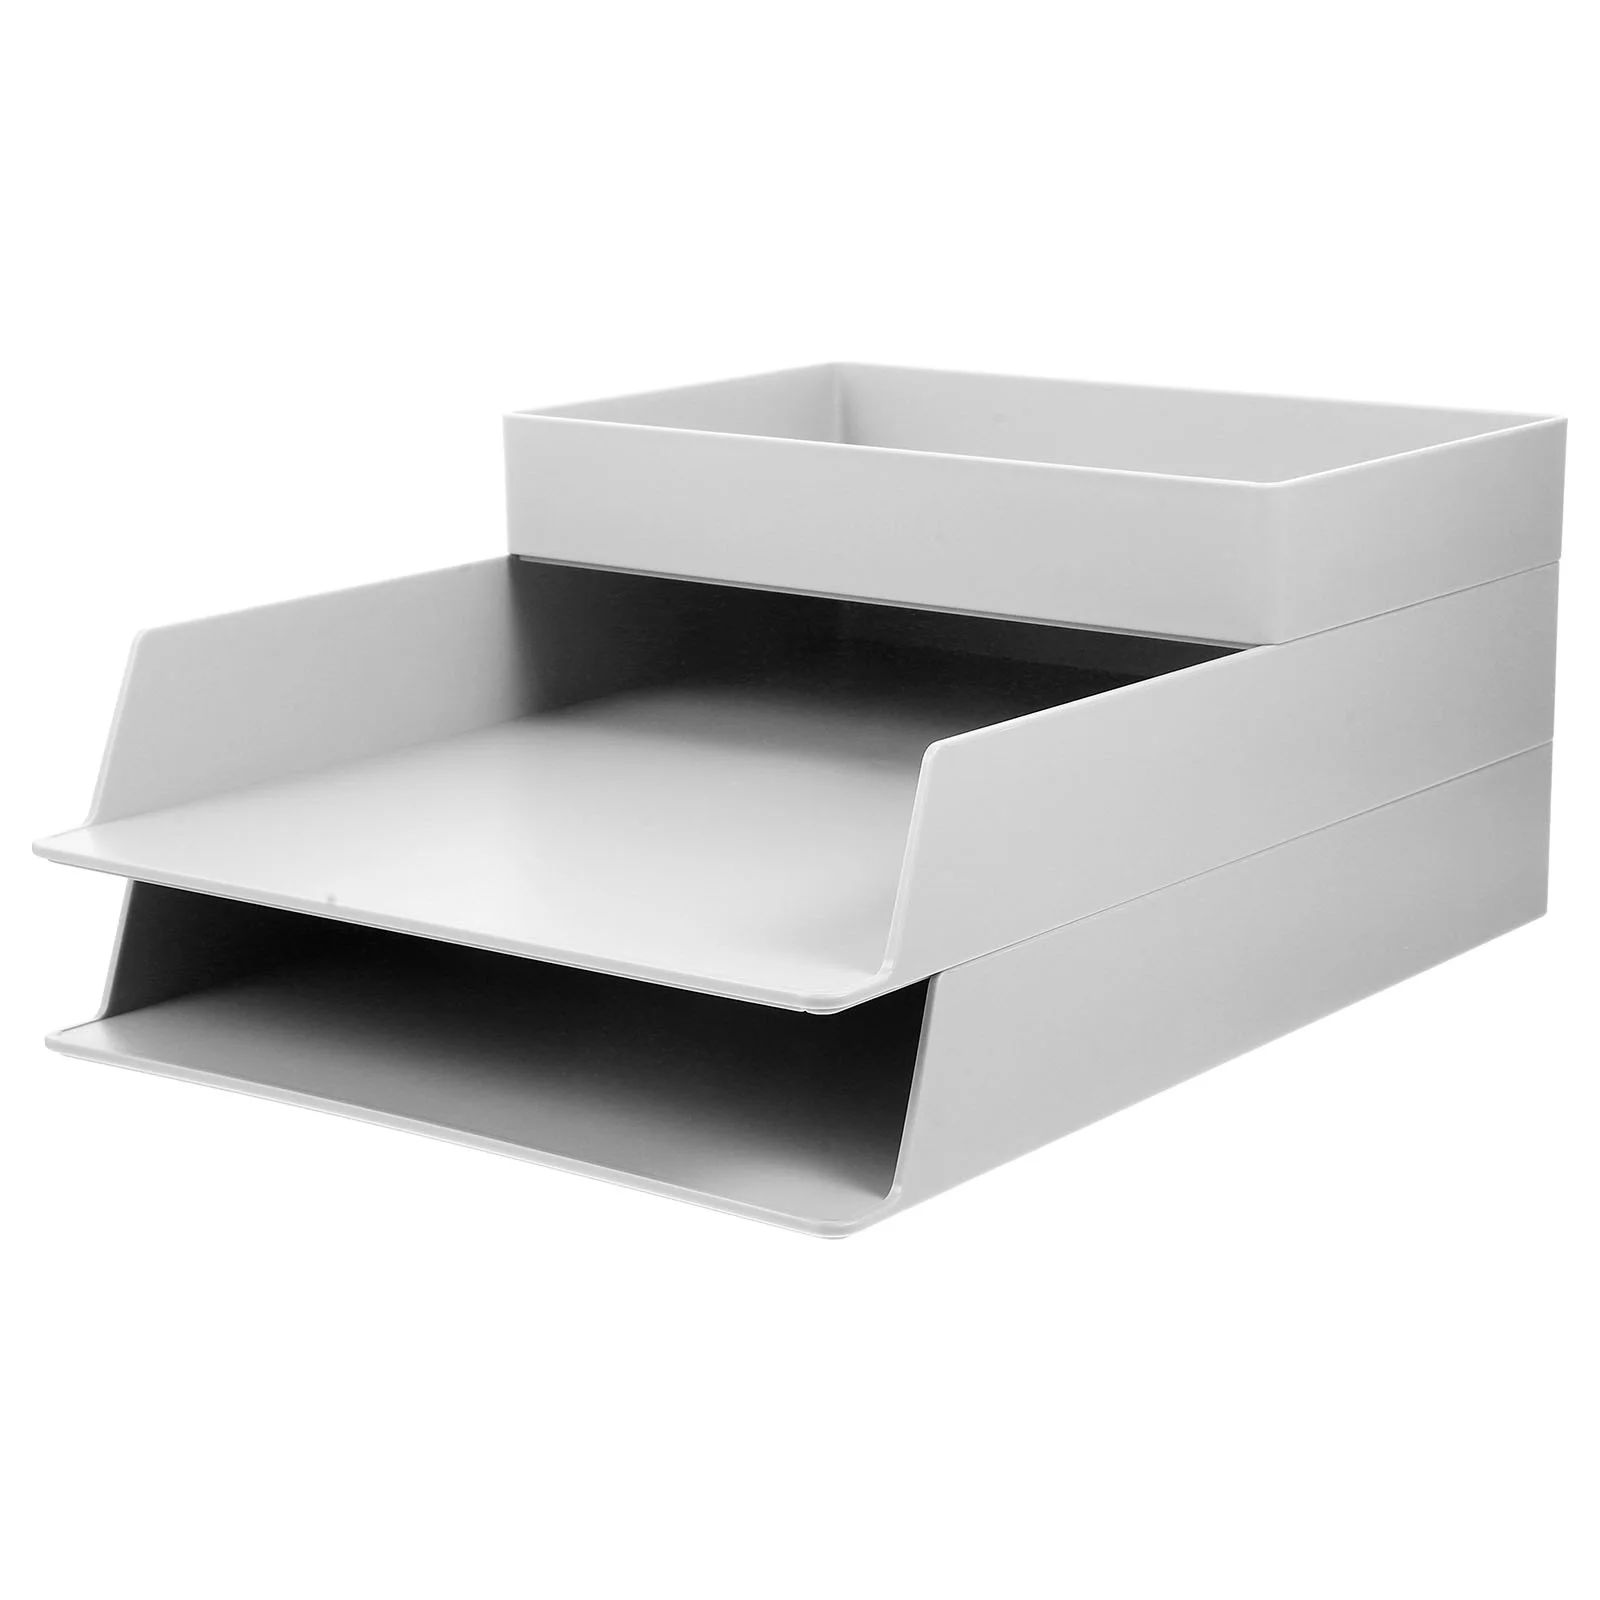 

Storage Shelves Simple Organizing Shelf Organizers For Office Box File White Document Holder Student